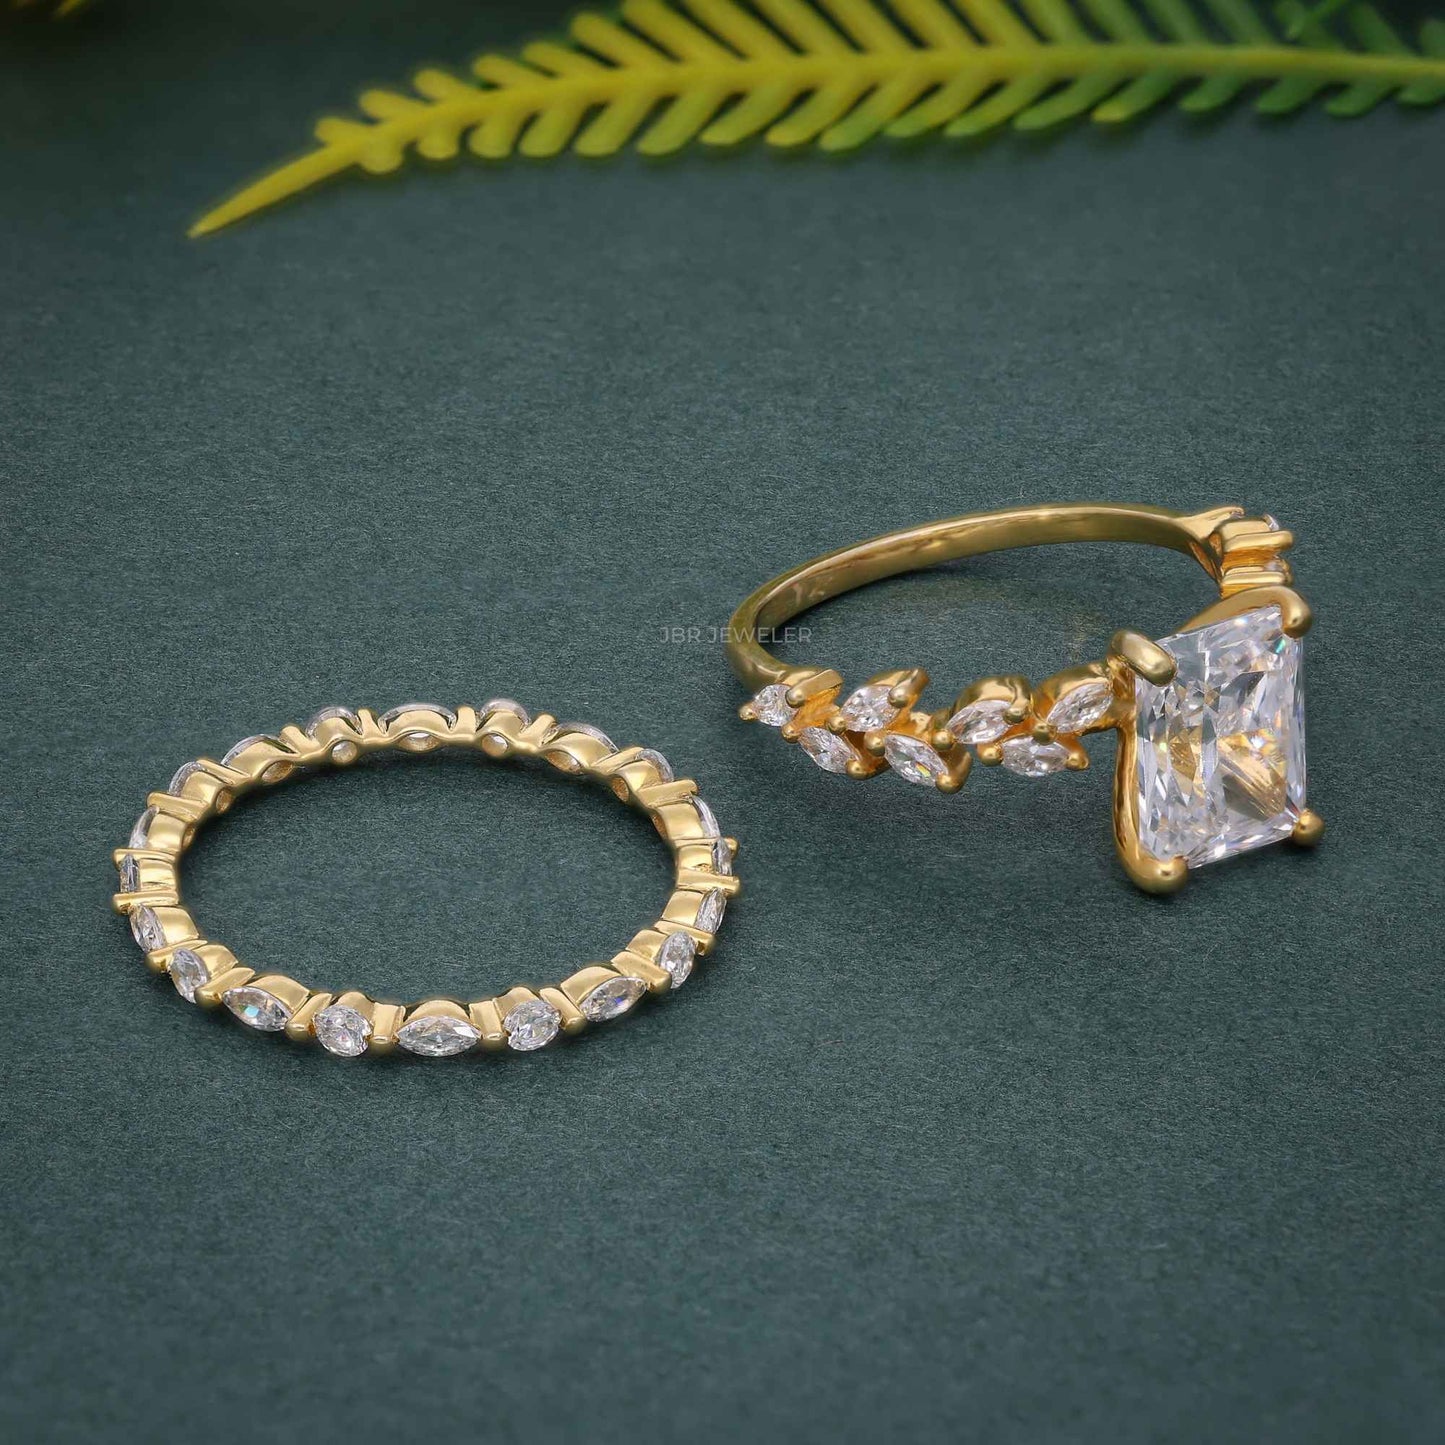 Radiant Cut Lab Grown Diamond Side Stones Bridal Wedding Ring Set